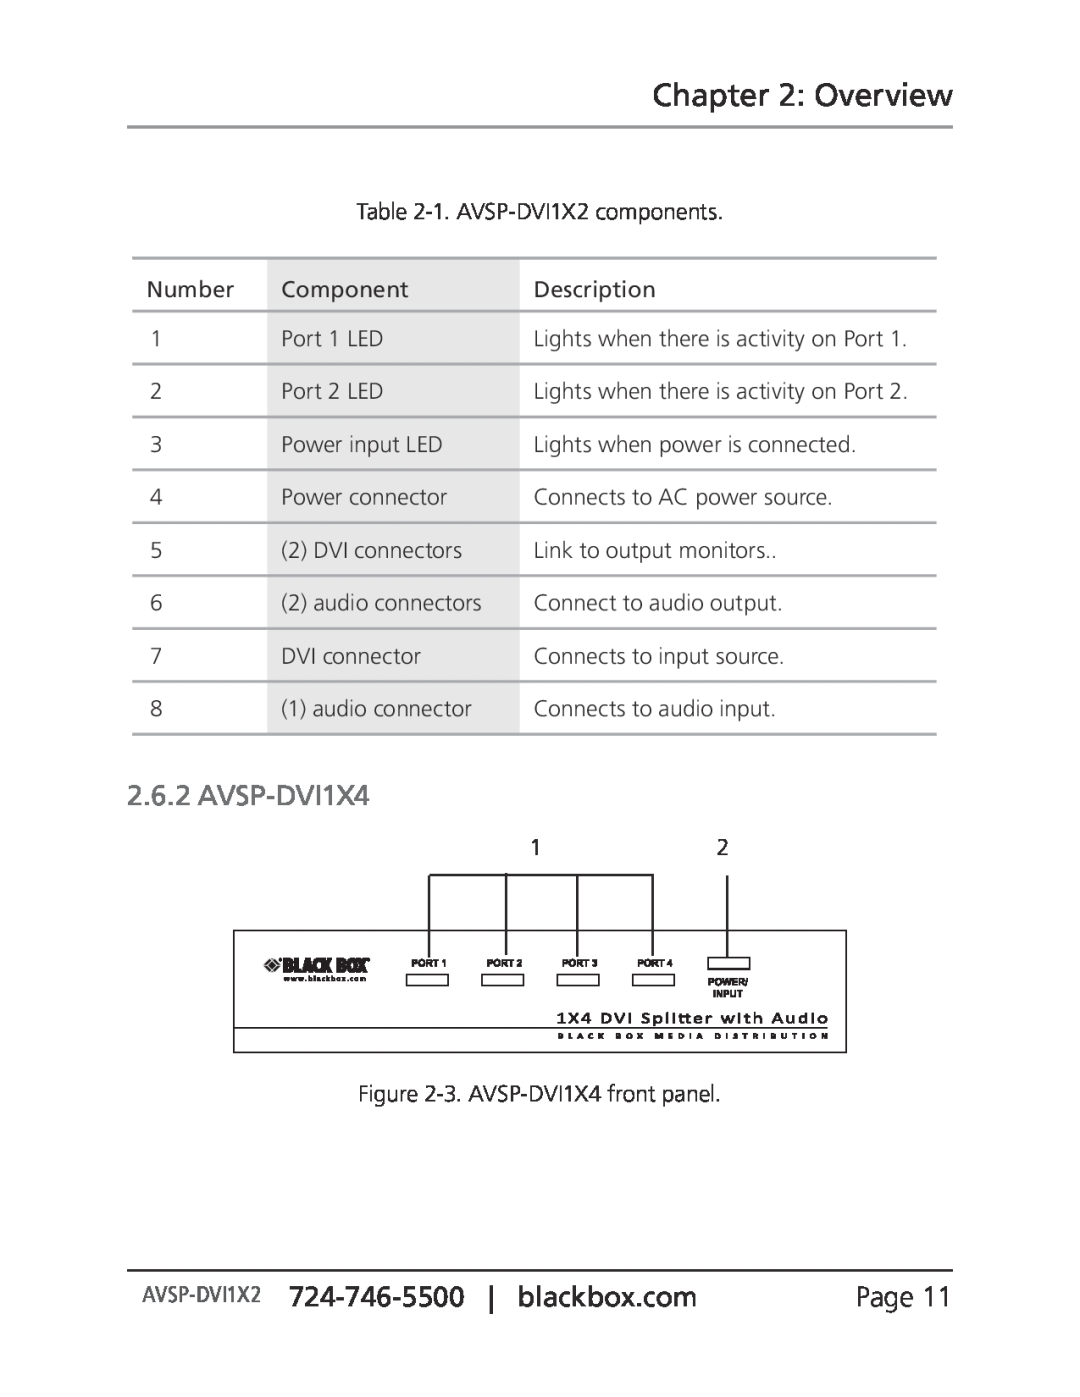 Black Box AVSP-DVI1X8, Black Box manual Overview, AVSP-DVI1X4, AVSP-DVI1X2 724-746-5500| blackbox.com, Page 